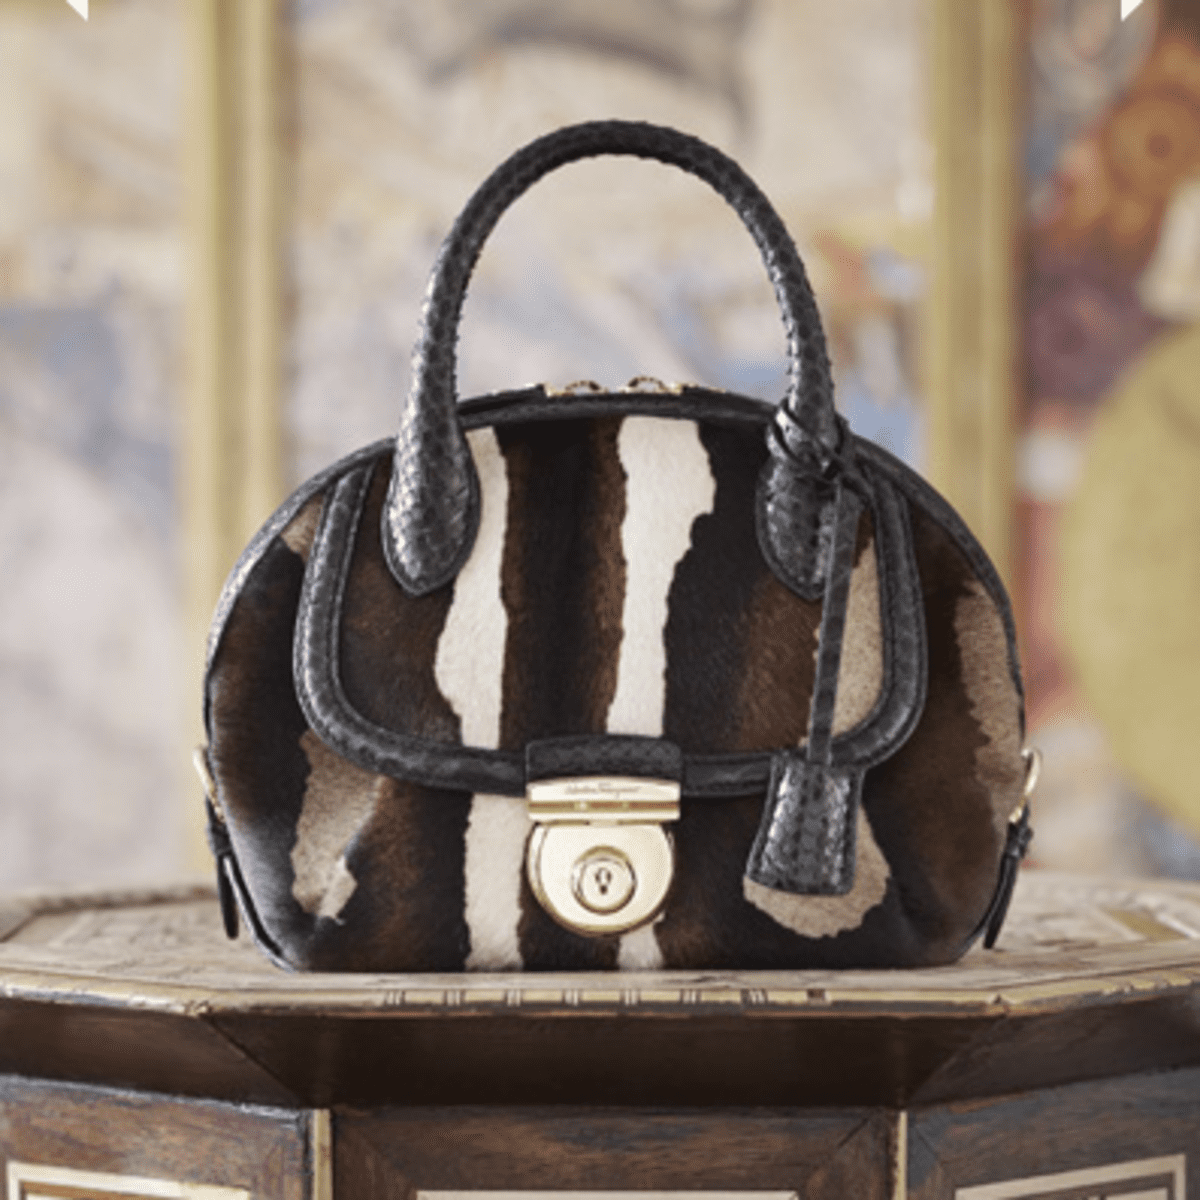 Luciana Calfskin Leather Bag